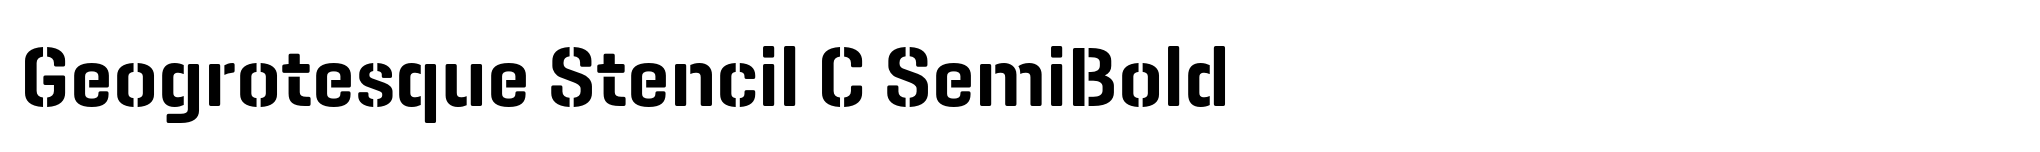 Geogrotesque Stencil C SemiBold image